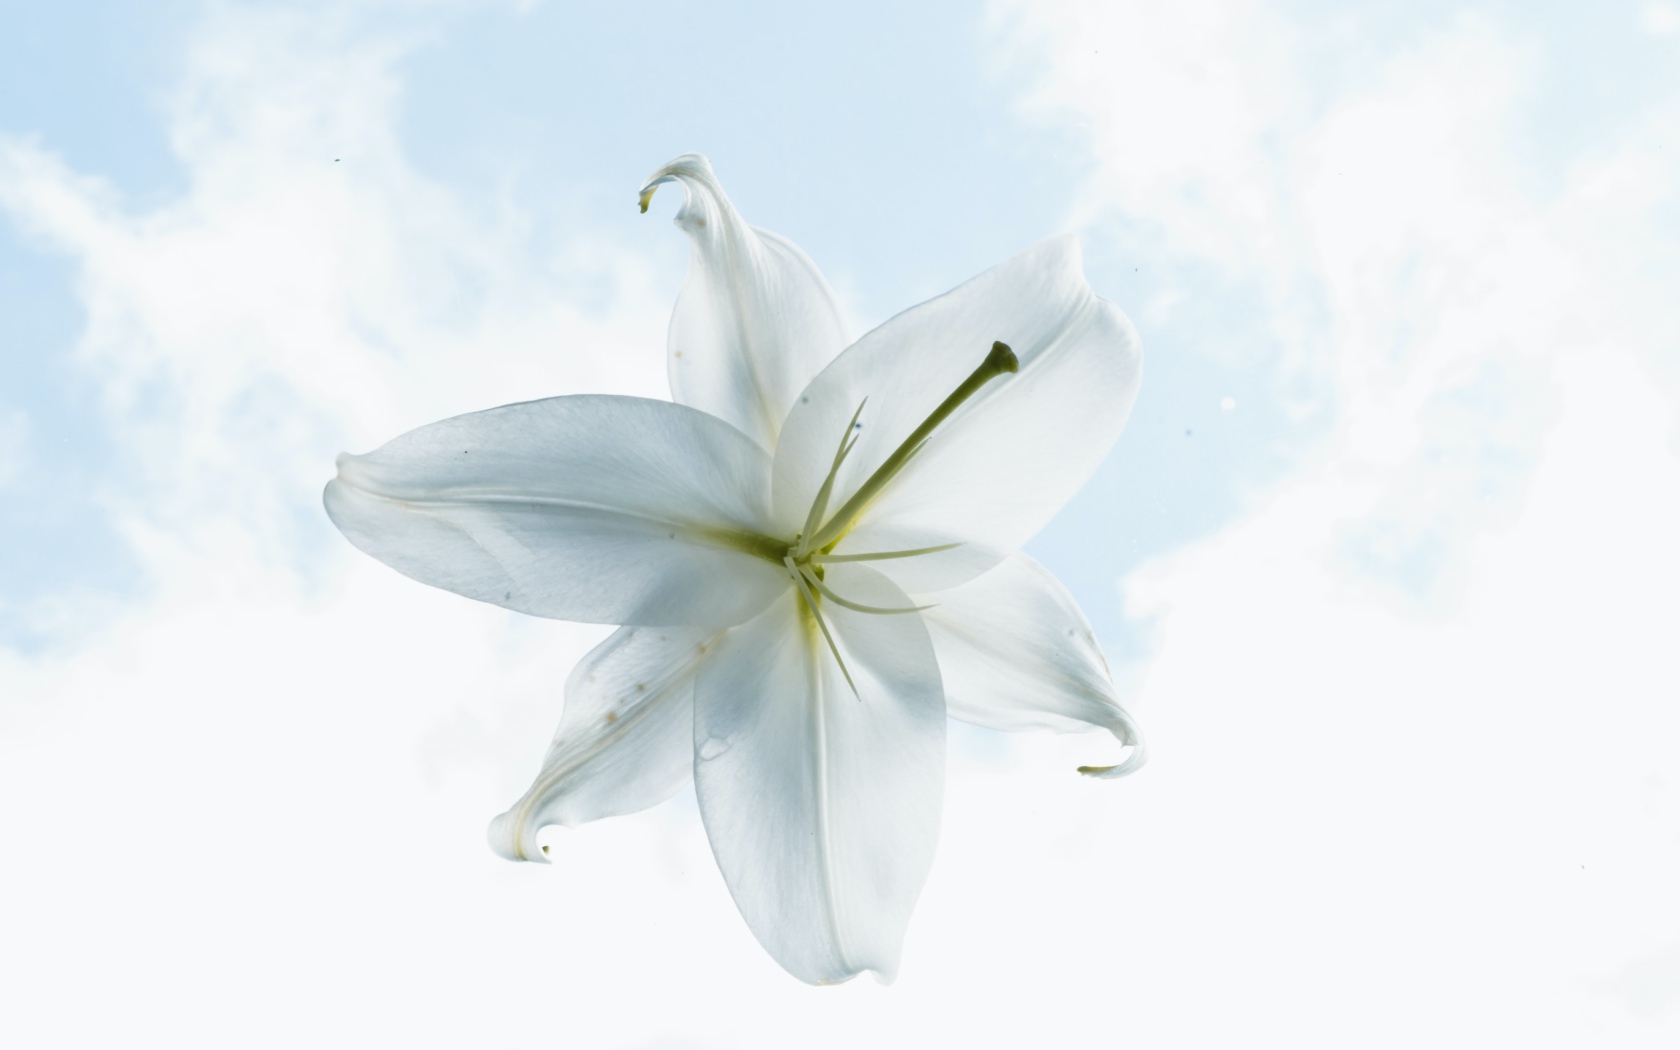 Белый цветок лилии на фоне неба